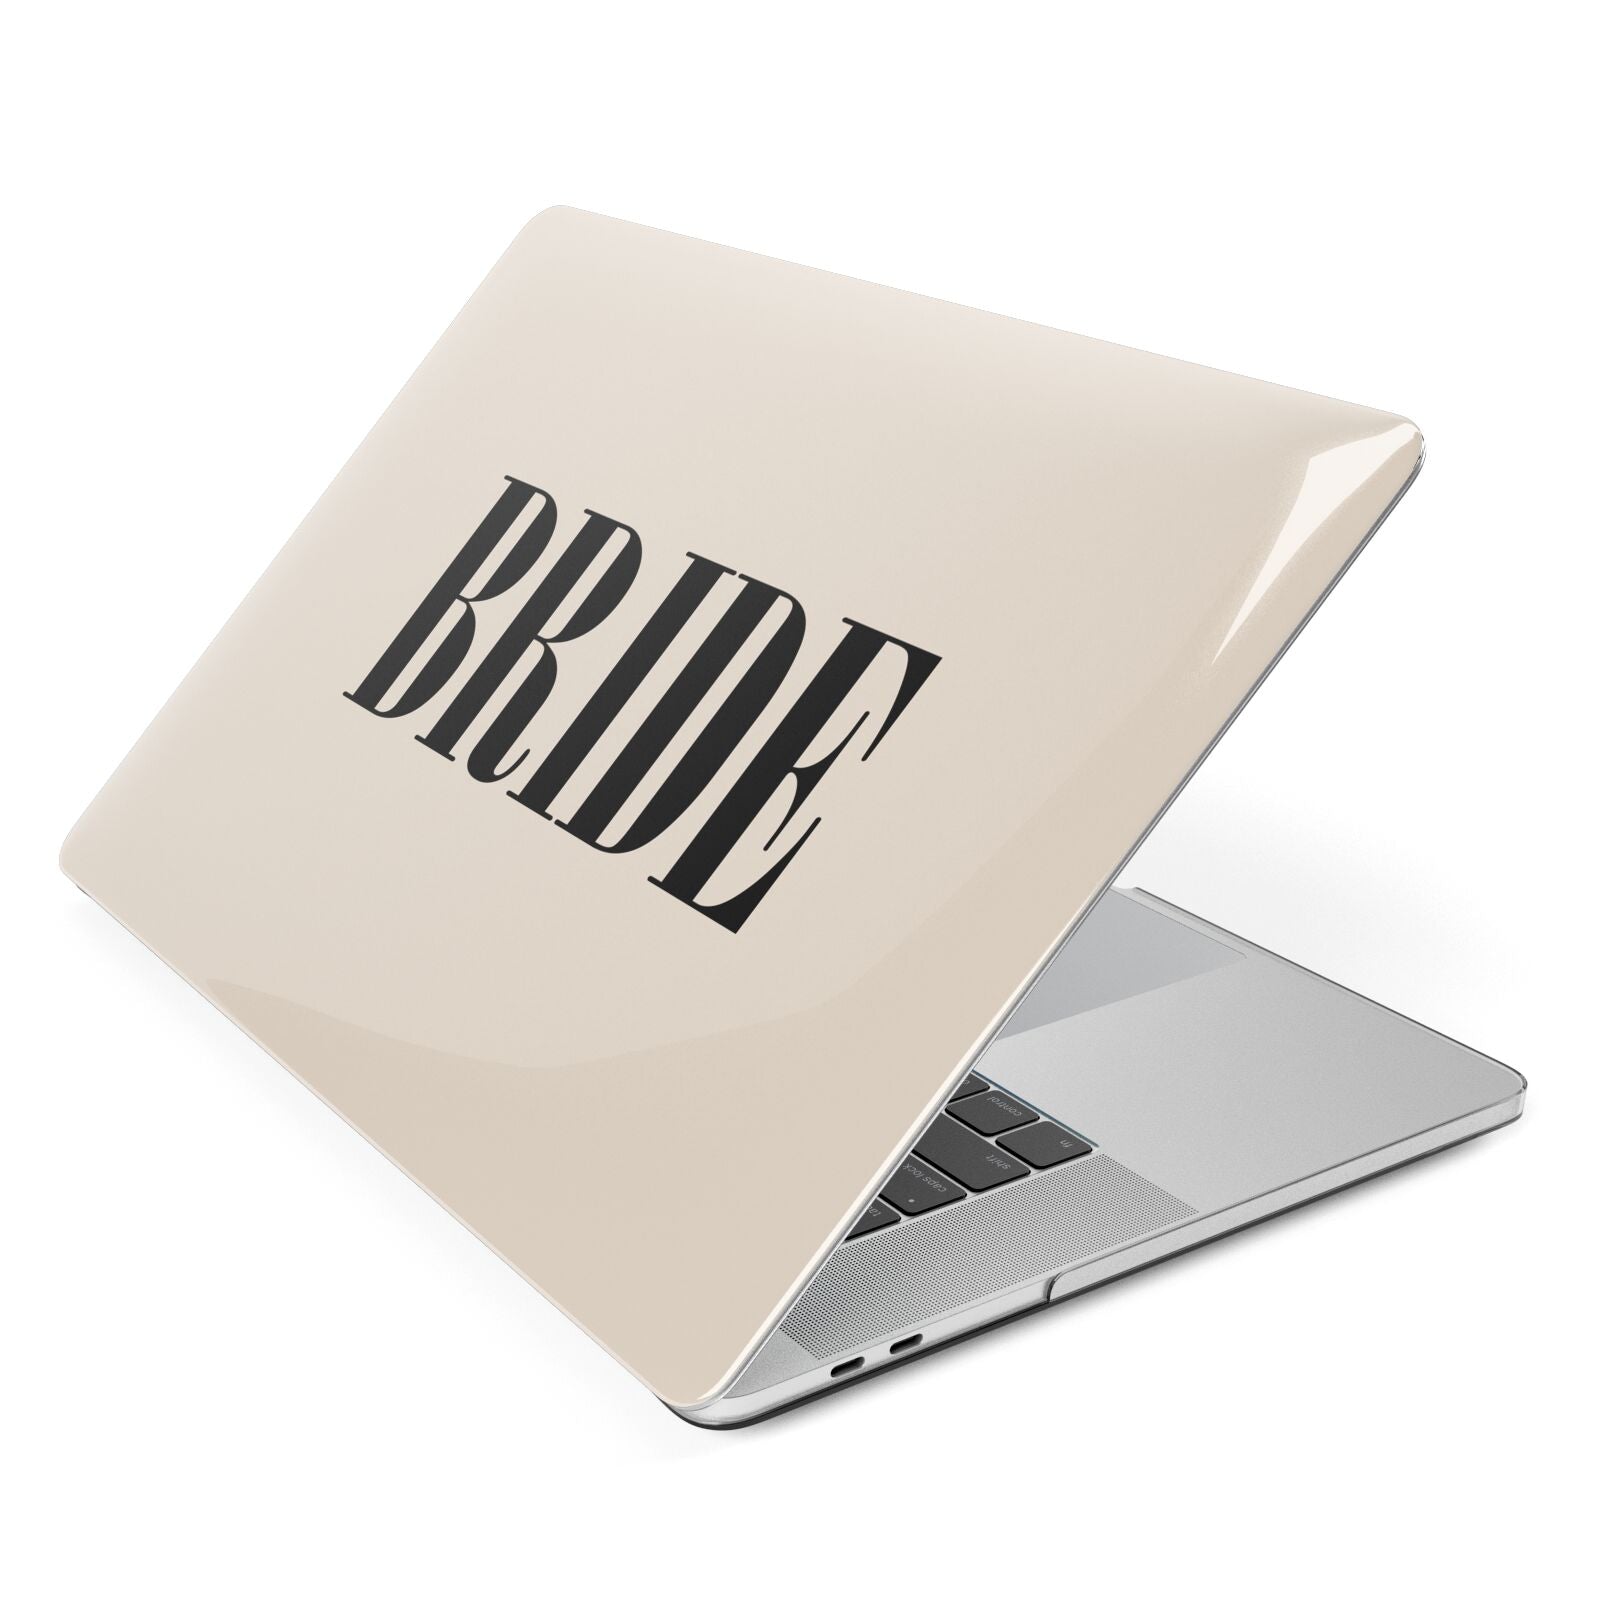 Future Bride Apple MacBook Case Side View